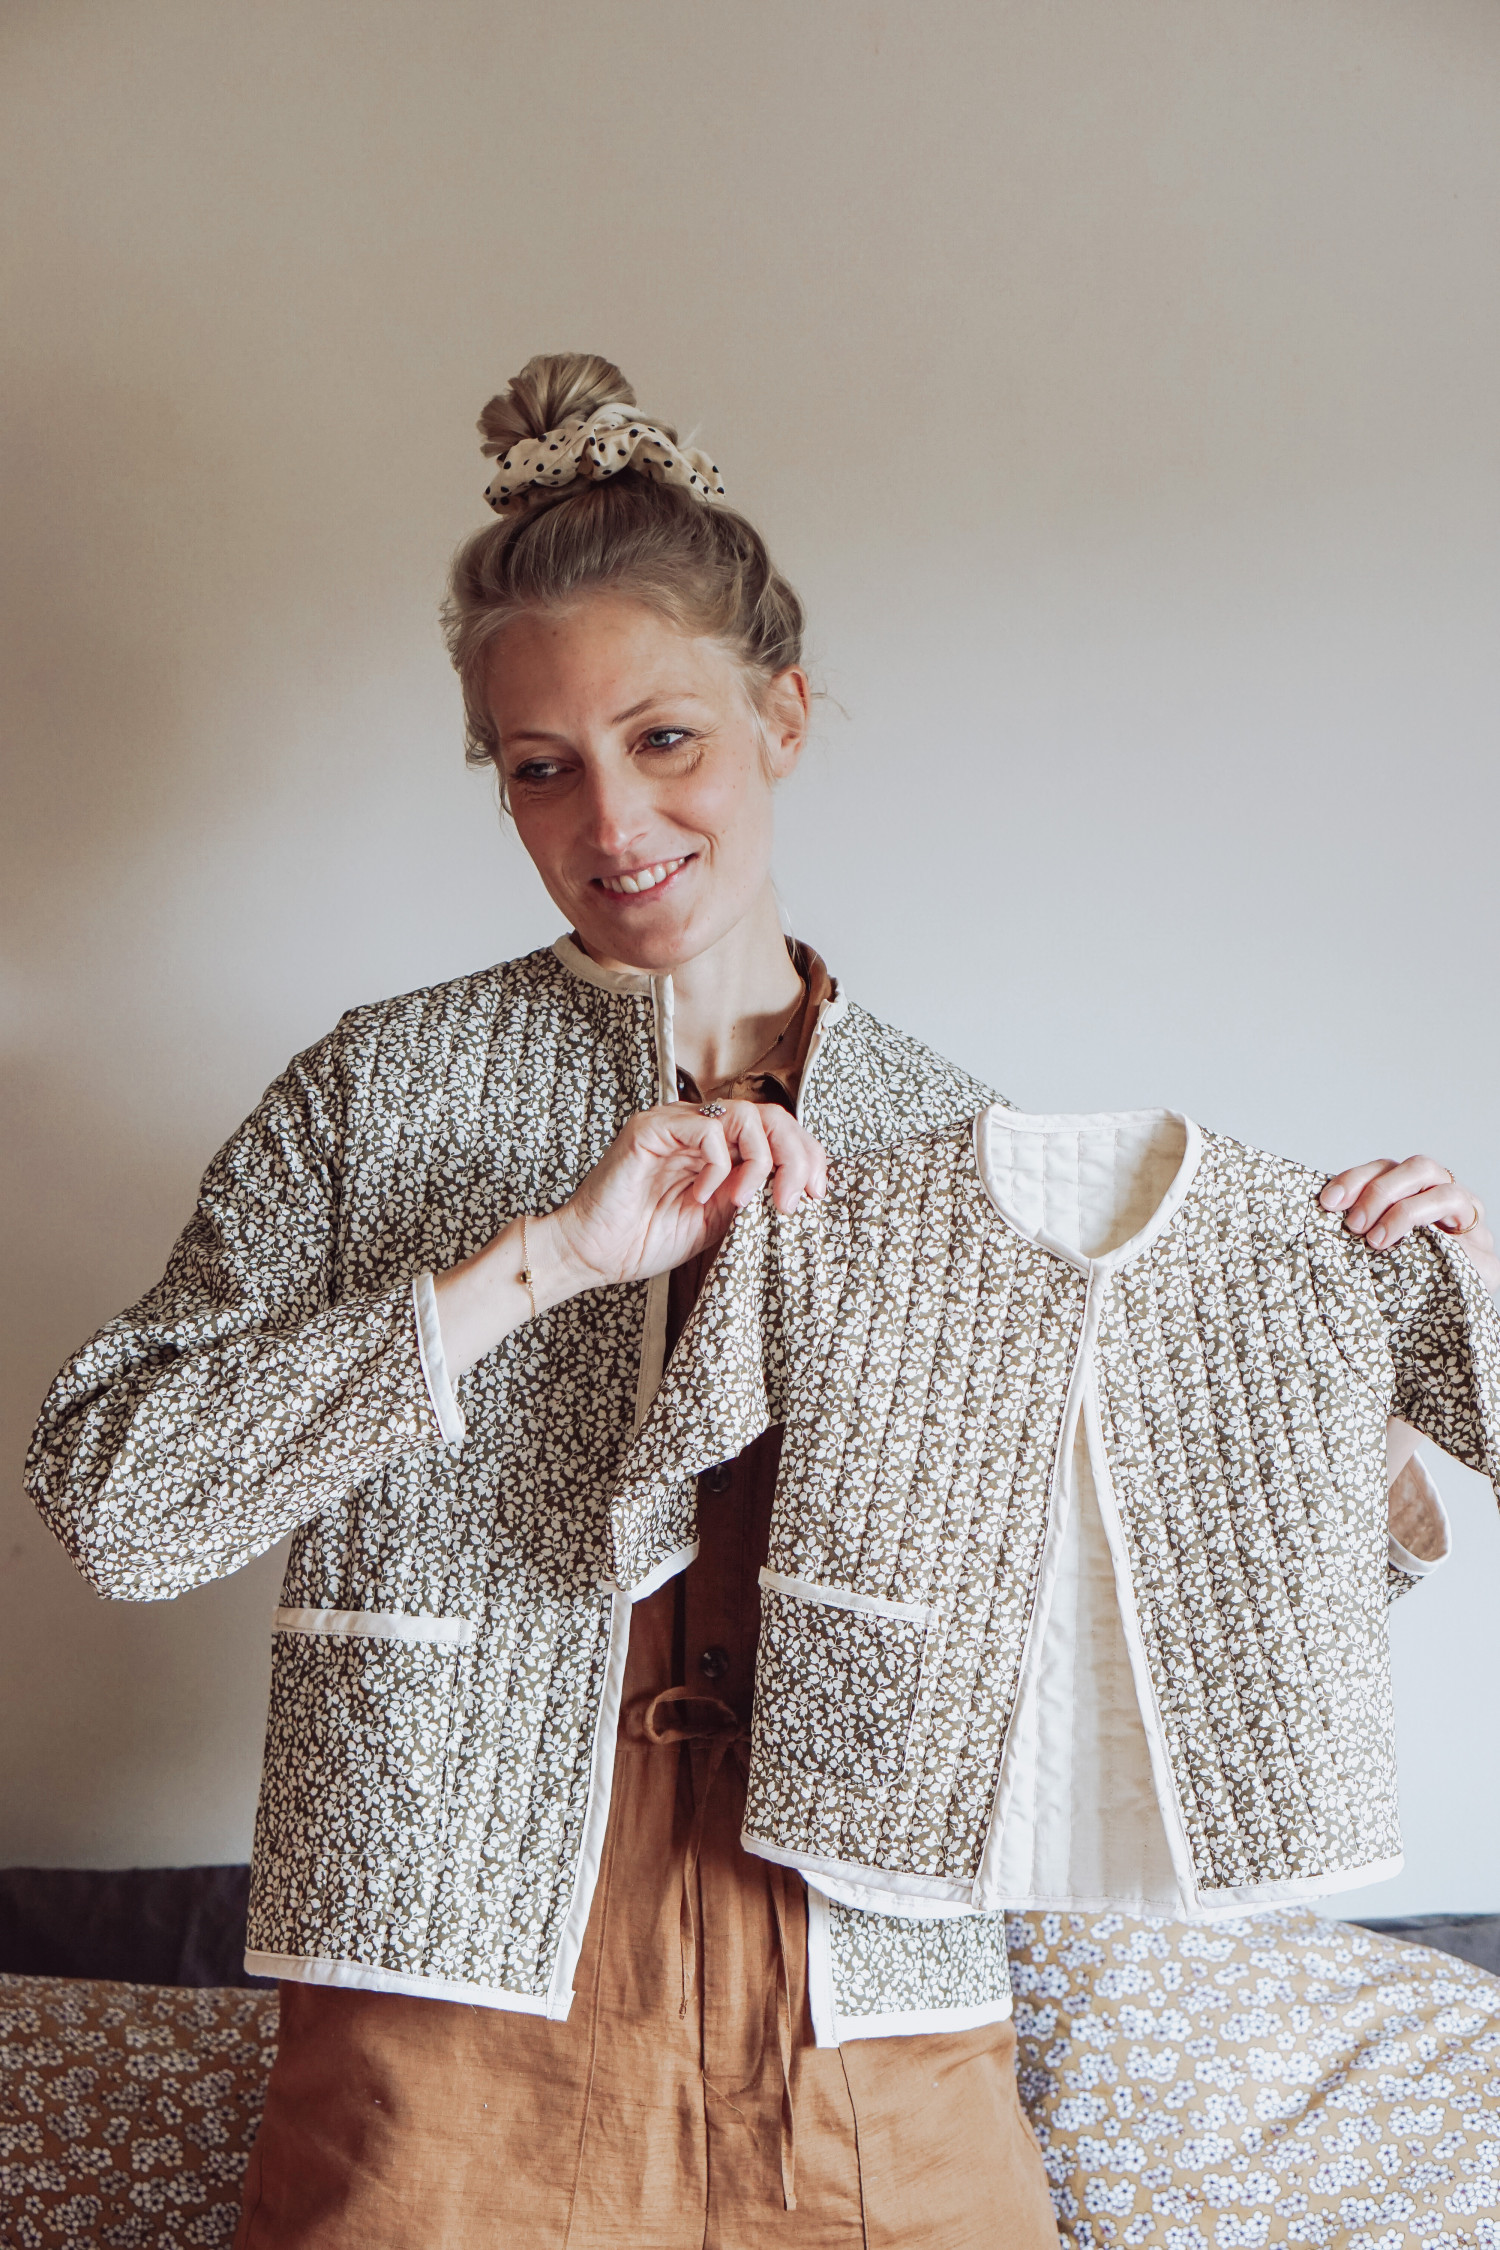 Quiltet baby jakke | DIY | Style by Josephine